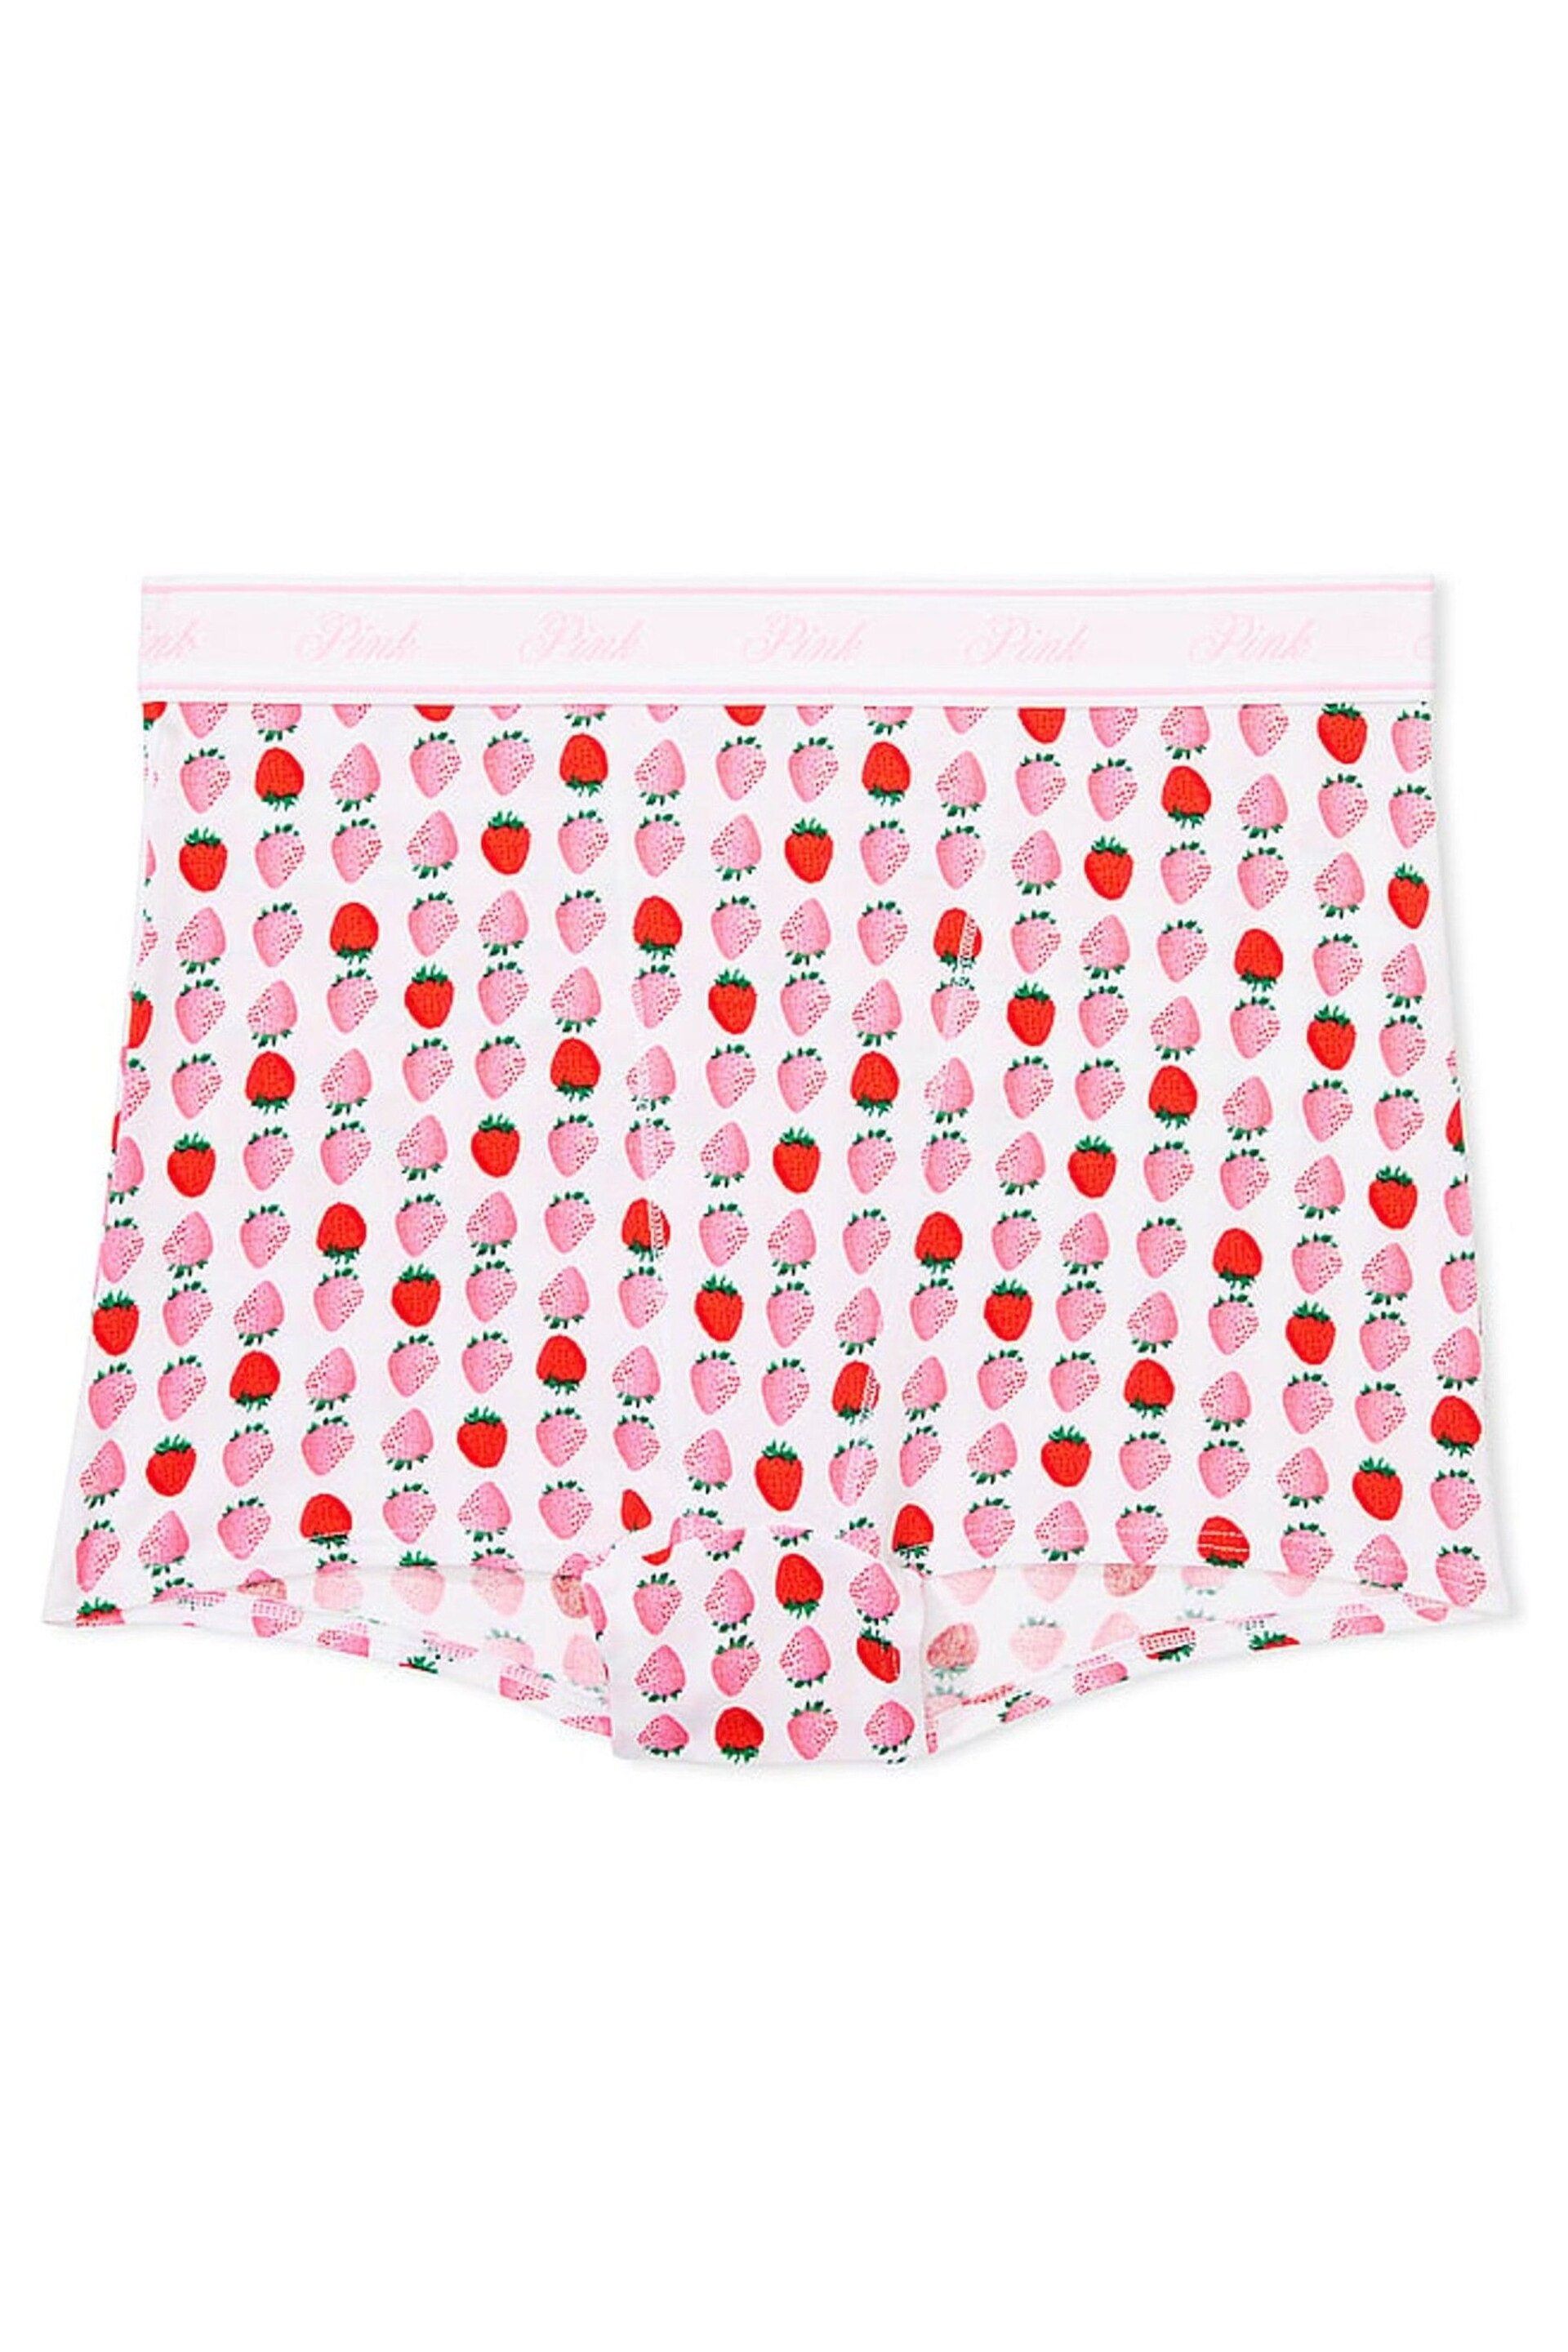 Victoria's Secret PINK Optic White Strawberry Print Cotton Logo High Waist Boyshort Knickers - Image 3 of 3